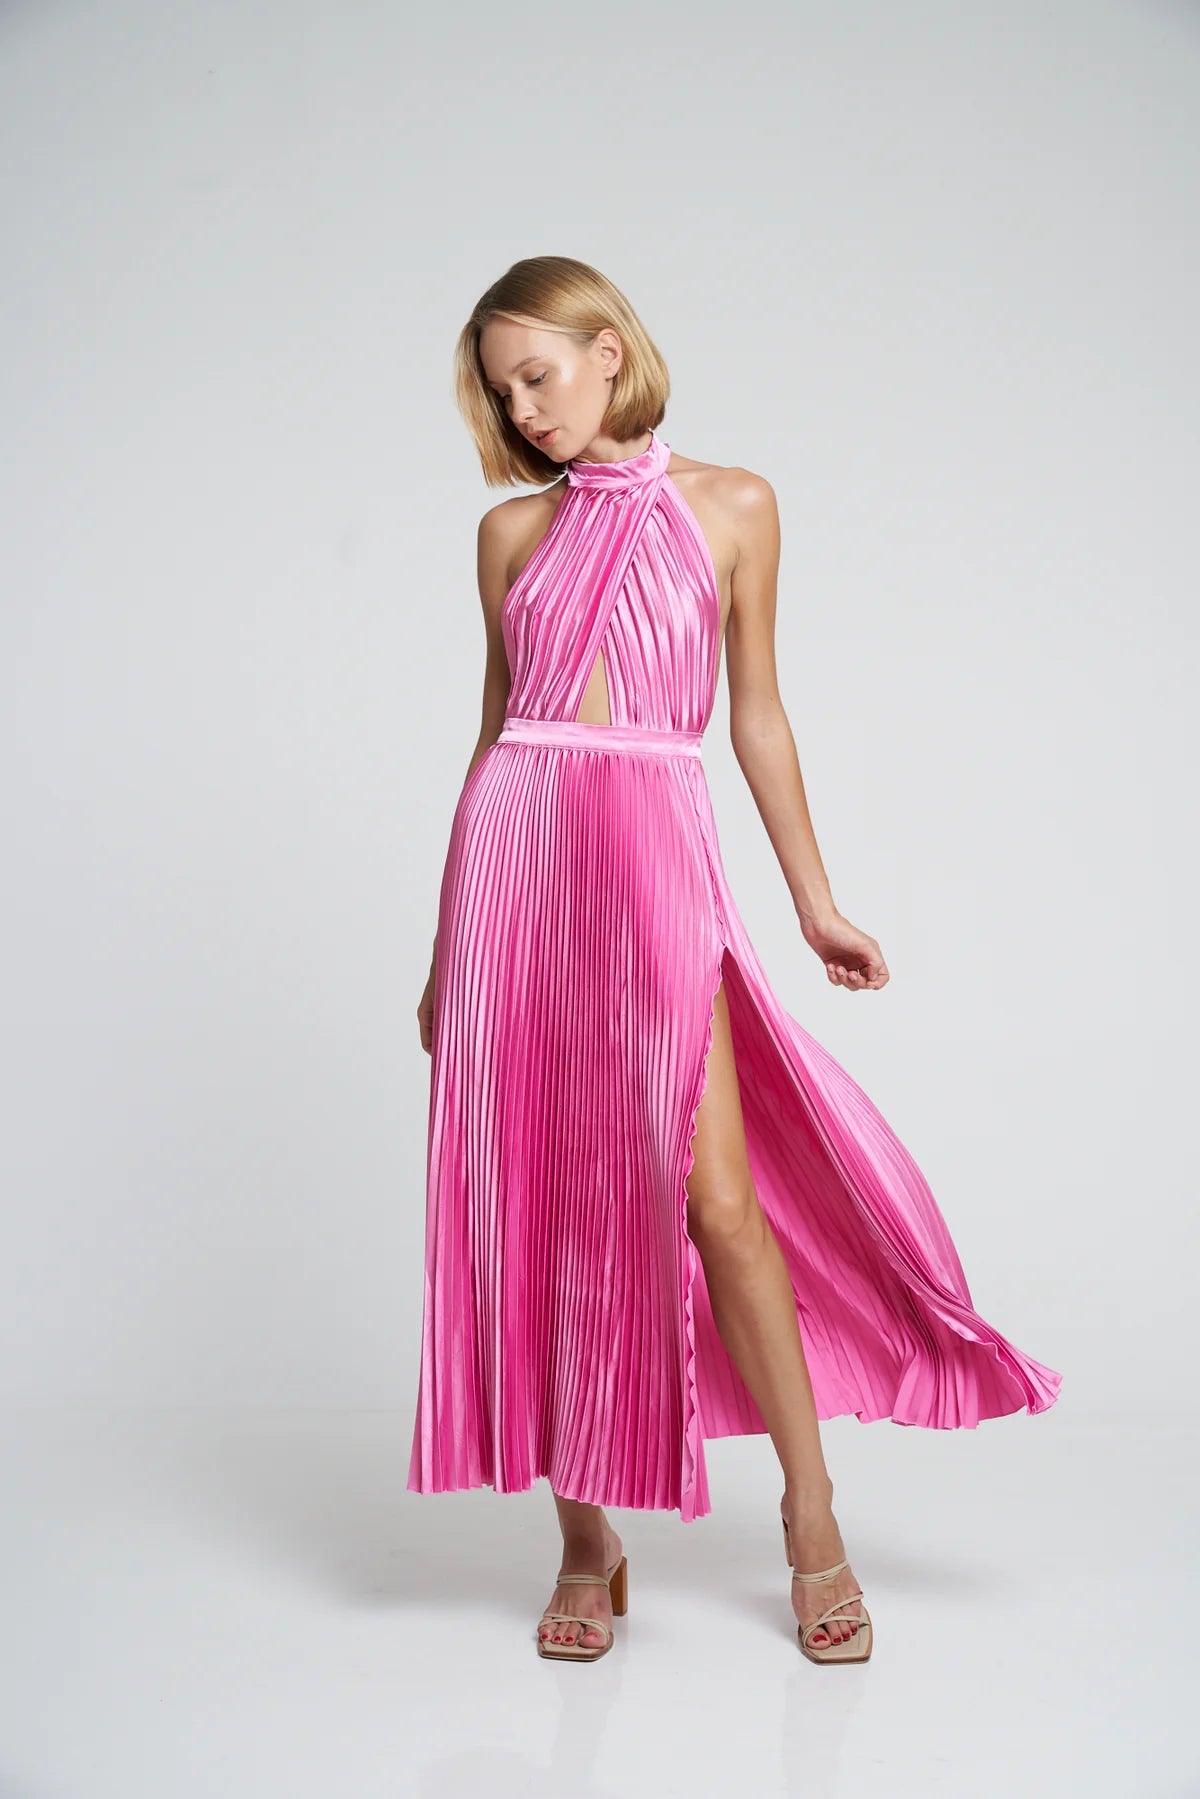 L'IDEE Renaissance Split Gown in Hot Pink